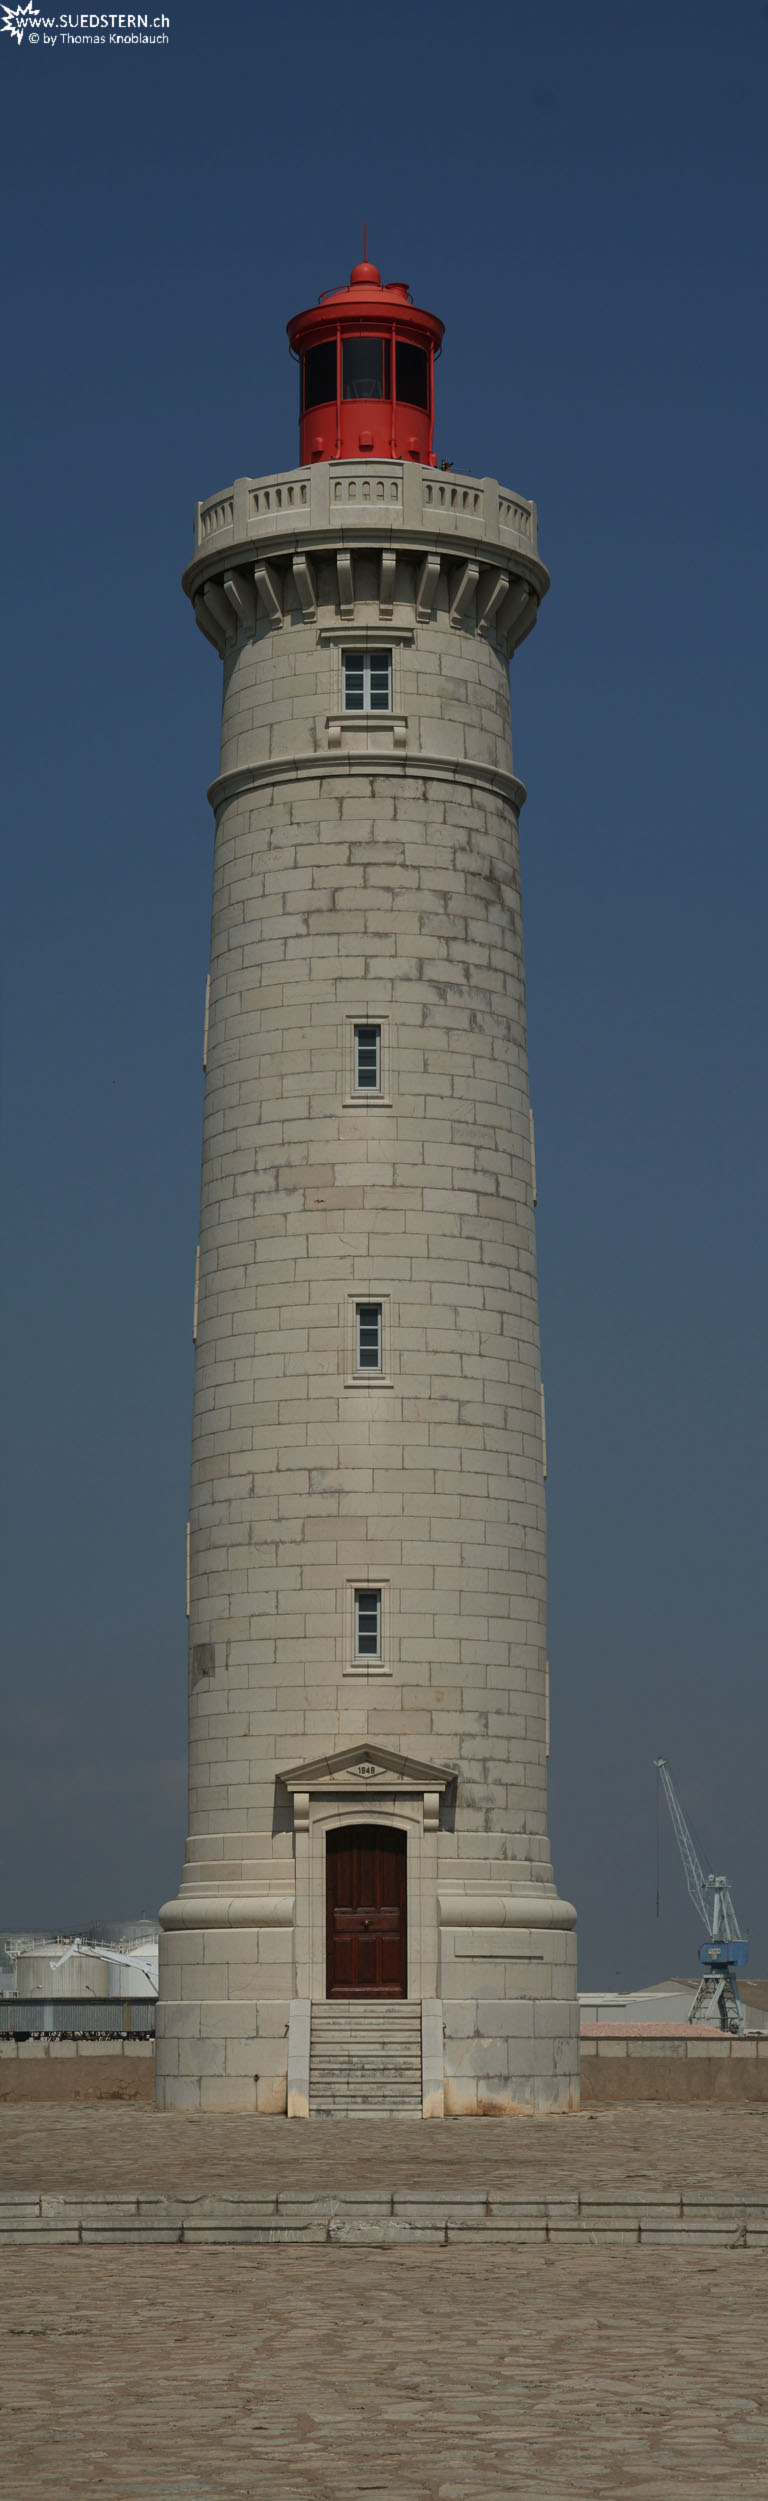 2008-08-30 - Lighthouse Sete, france